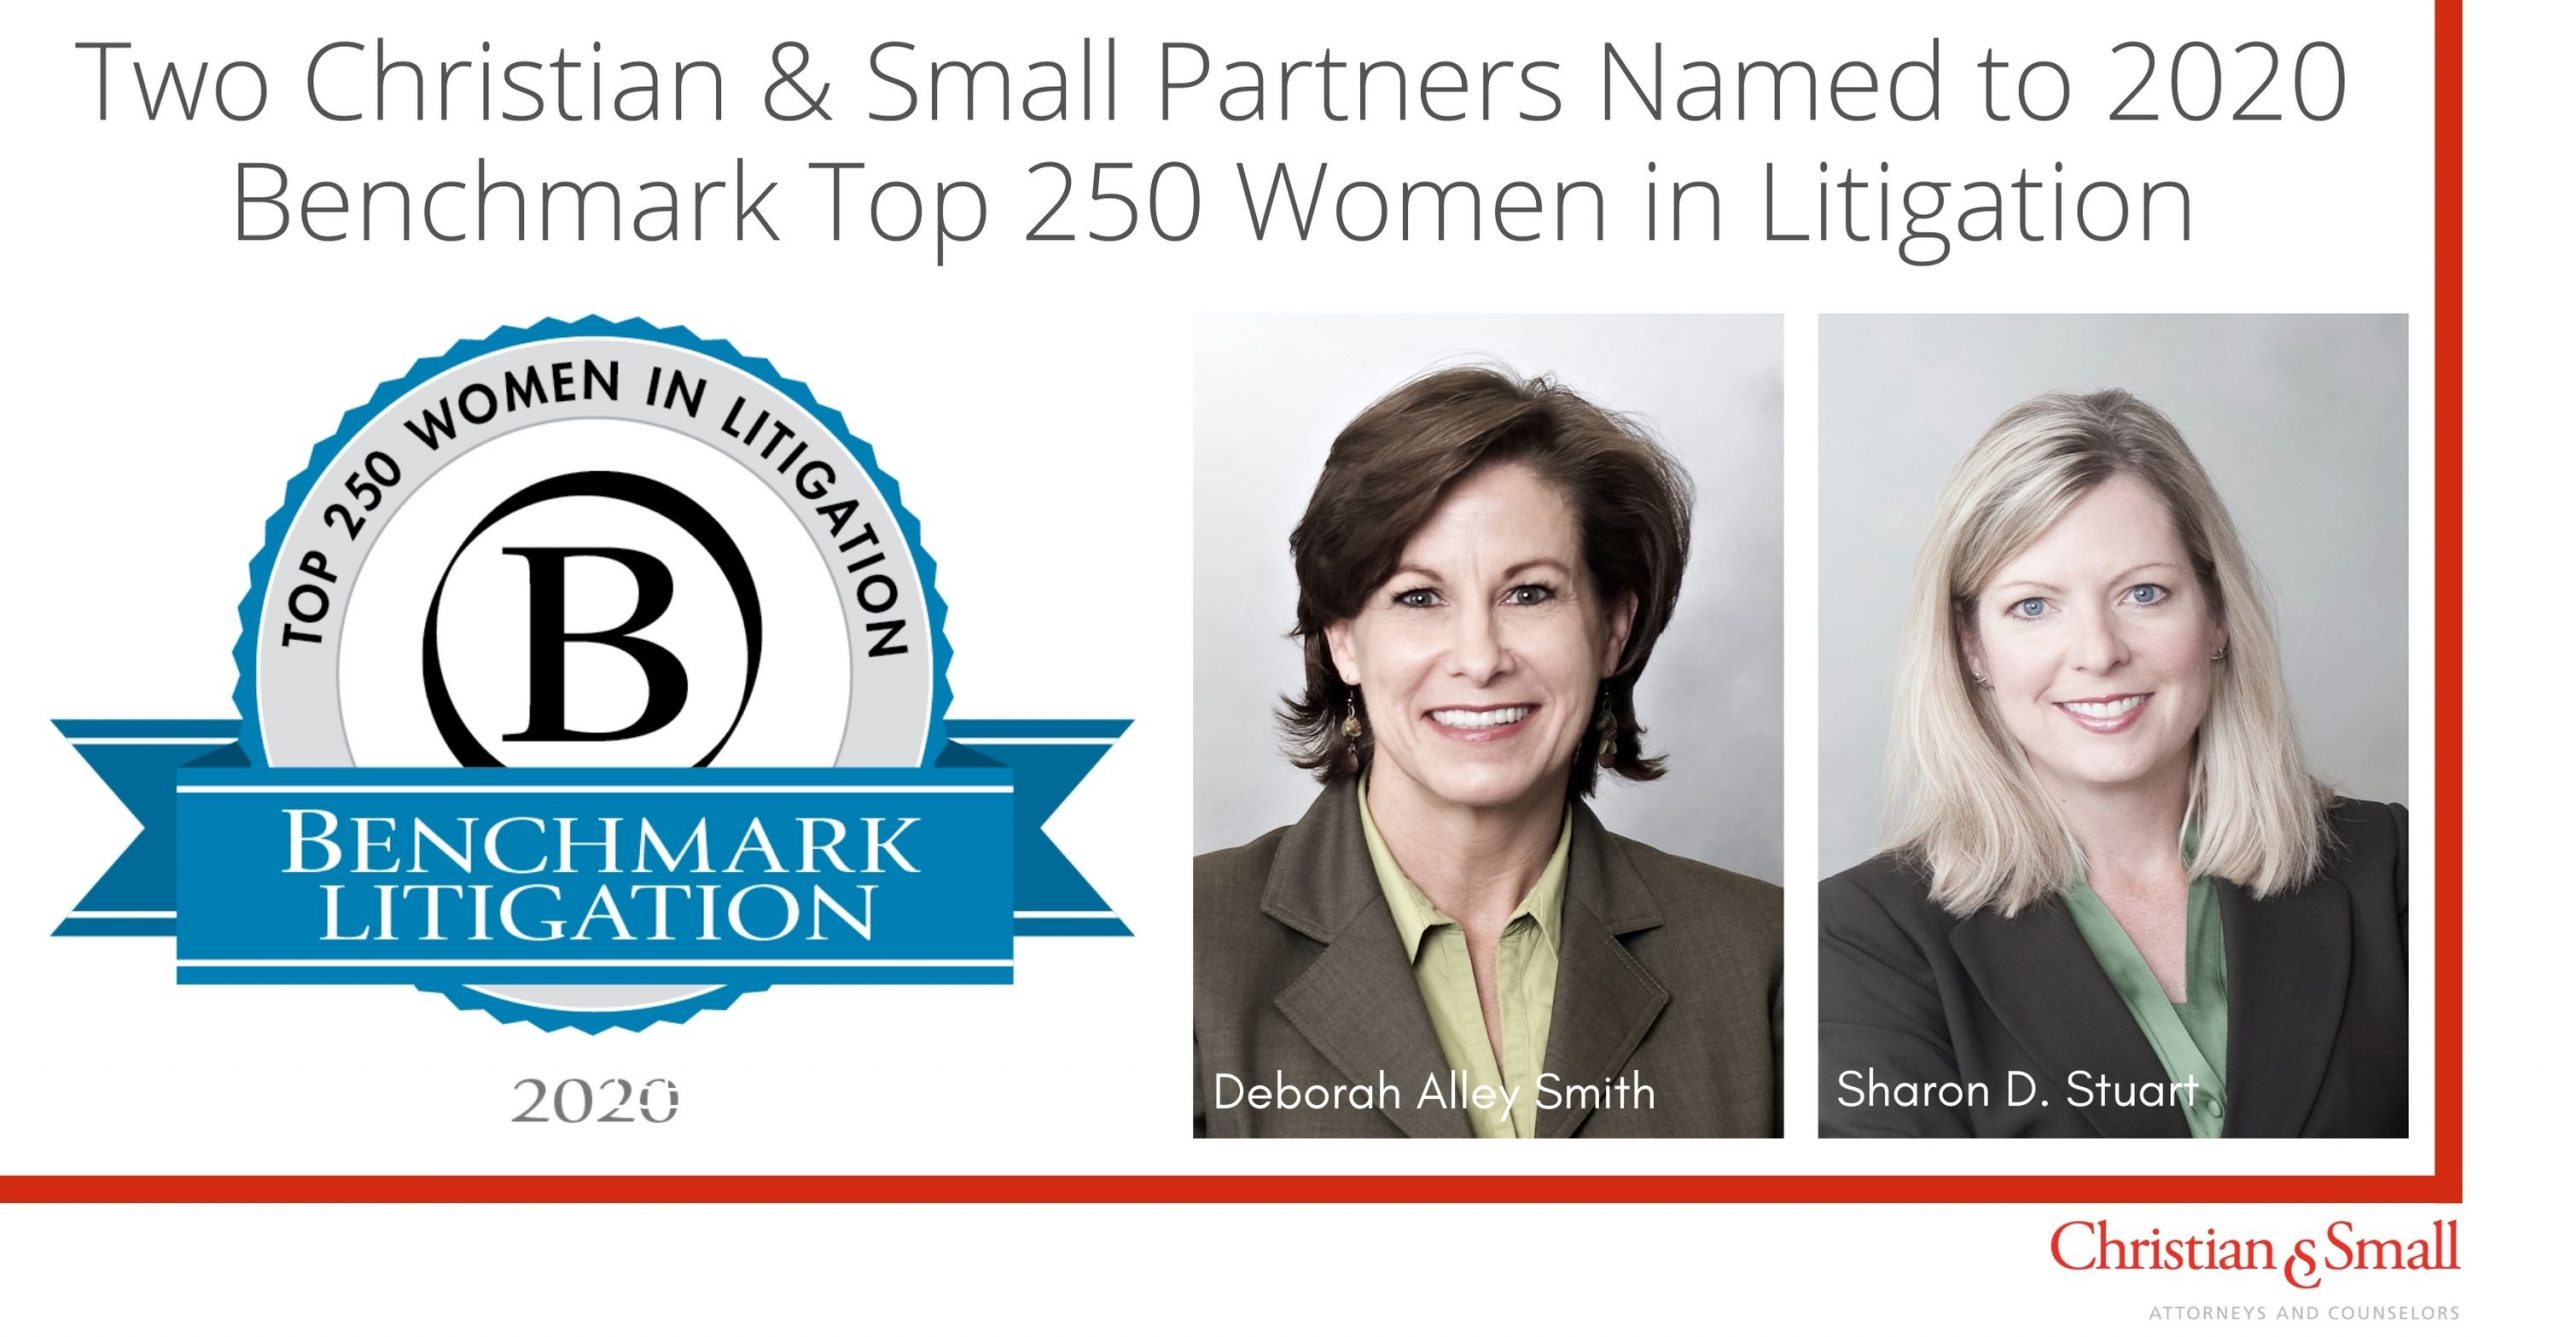 Sharon D. Stuart and Deborah Alley Smith Named to 2020 Benchmark Litigation’s Top 250 Women in Litigation